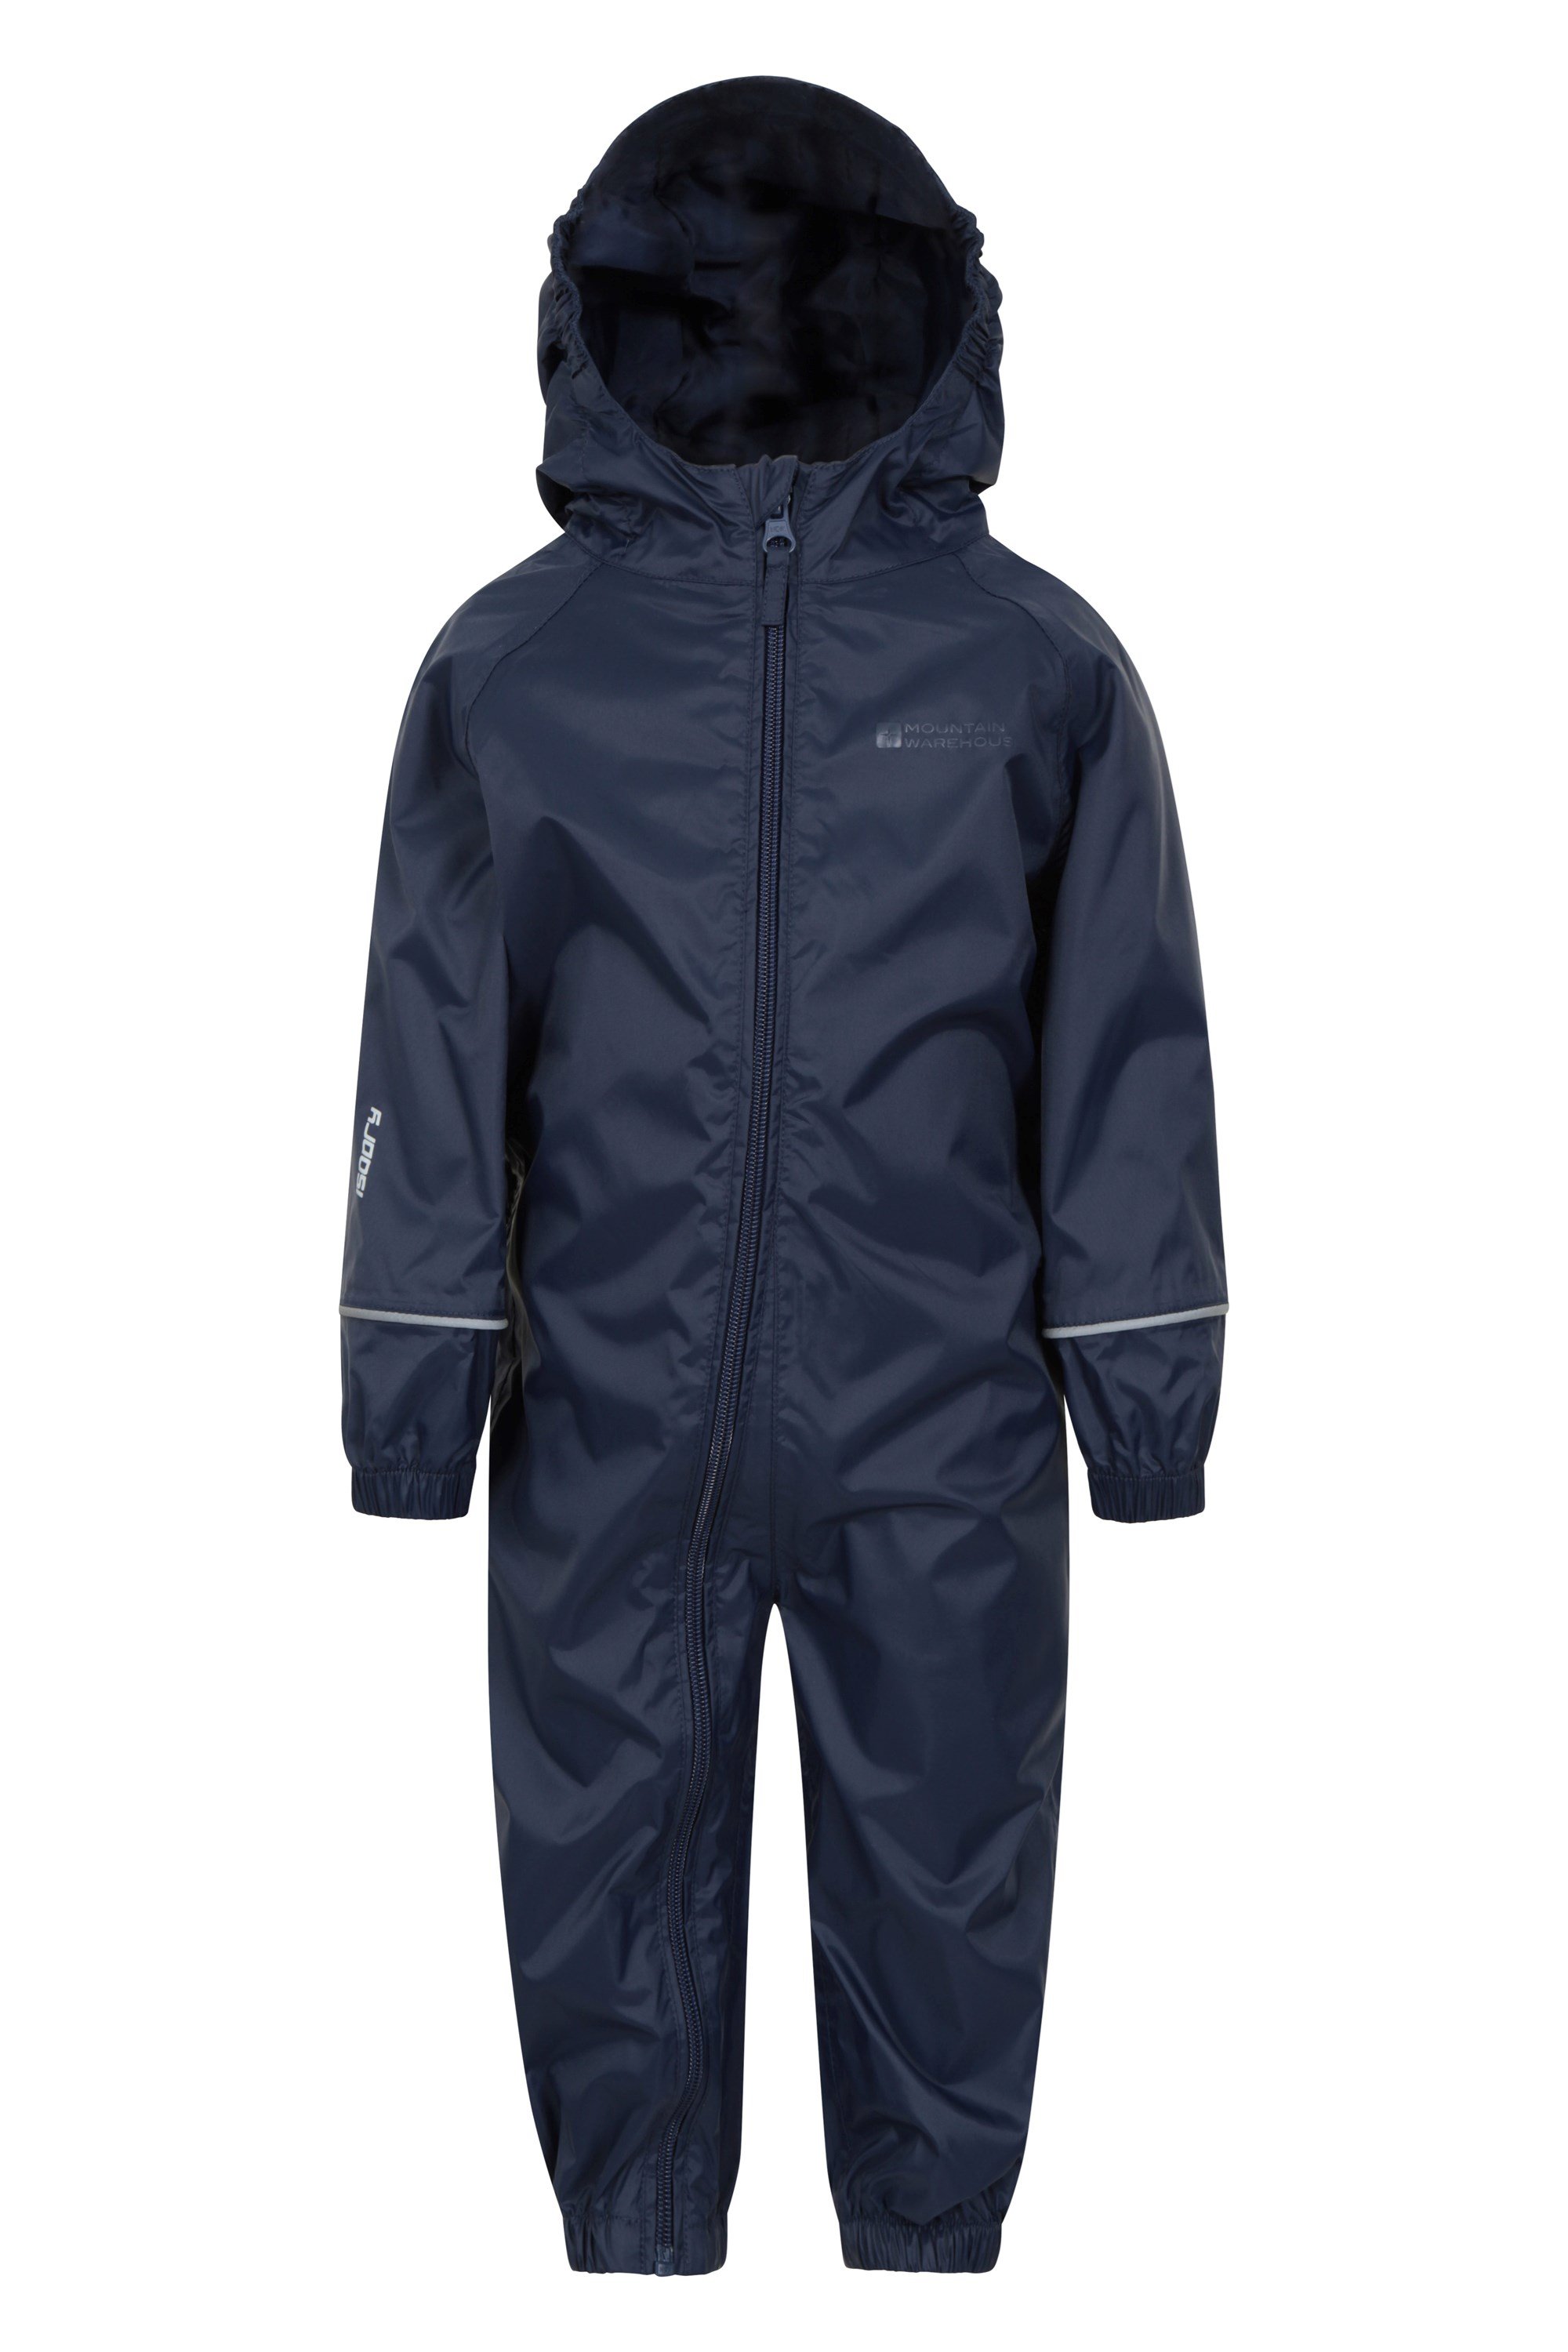 Puddle Kids Waterproof Rain Suit - Blue